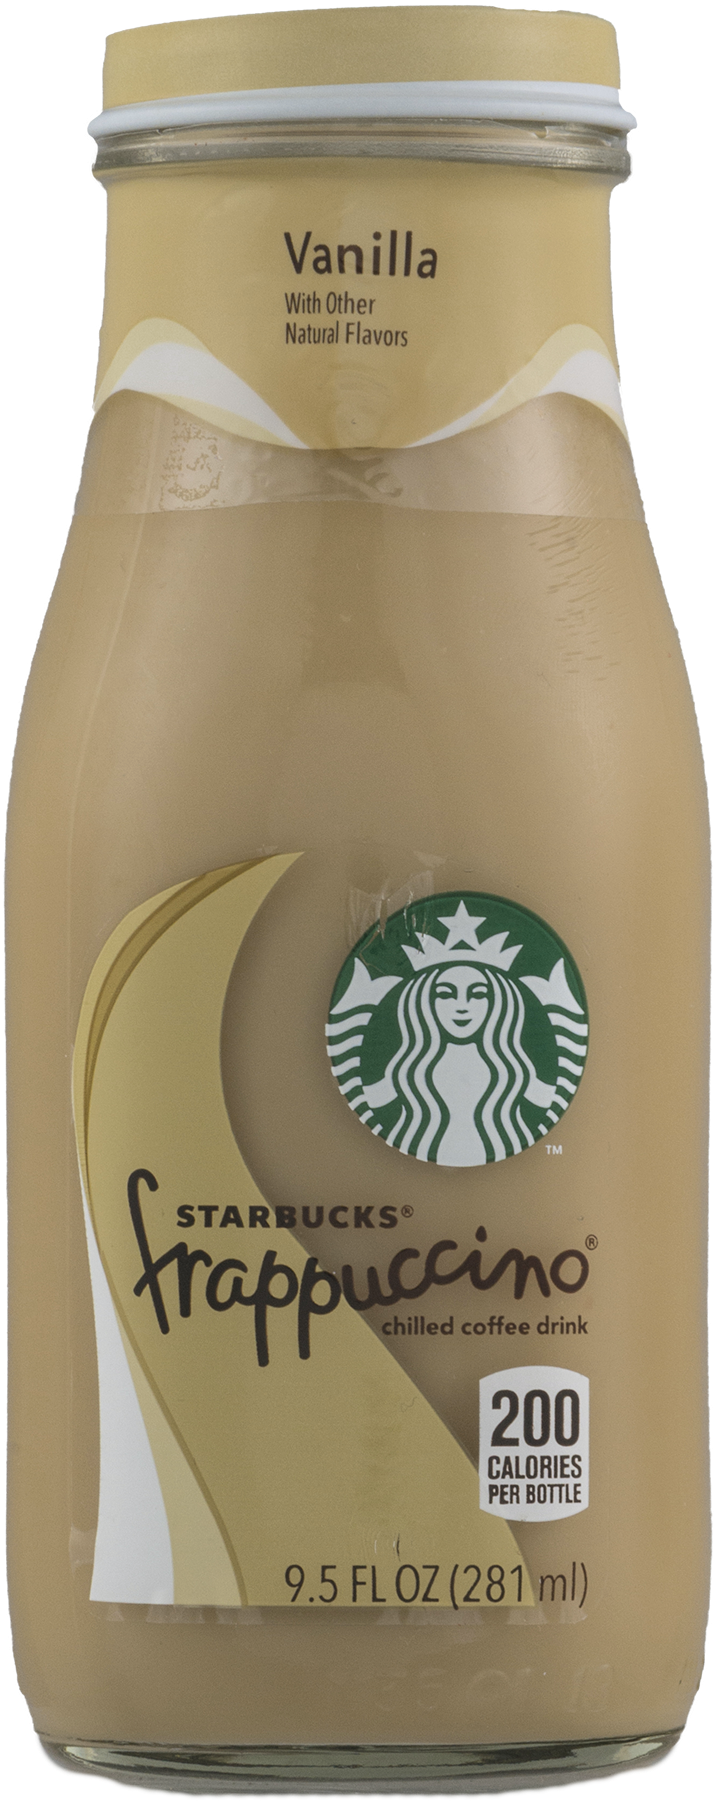 Starbucks Frappuccino Coffee Drink, Vanilla - Starbucks Frappuccino Almond Milk (1800x1800), Png Download